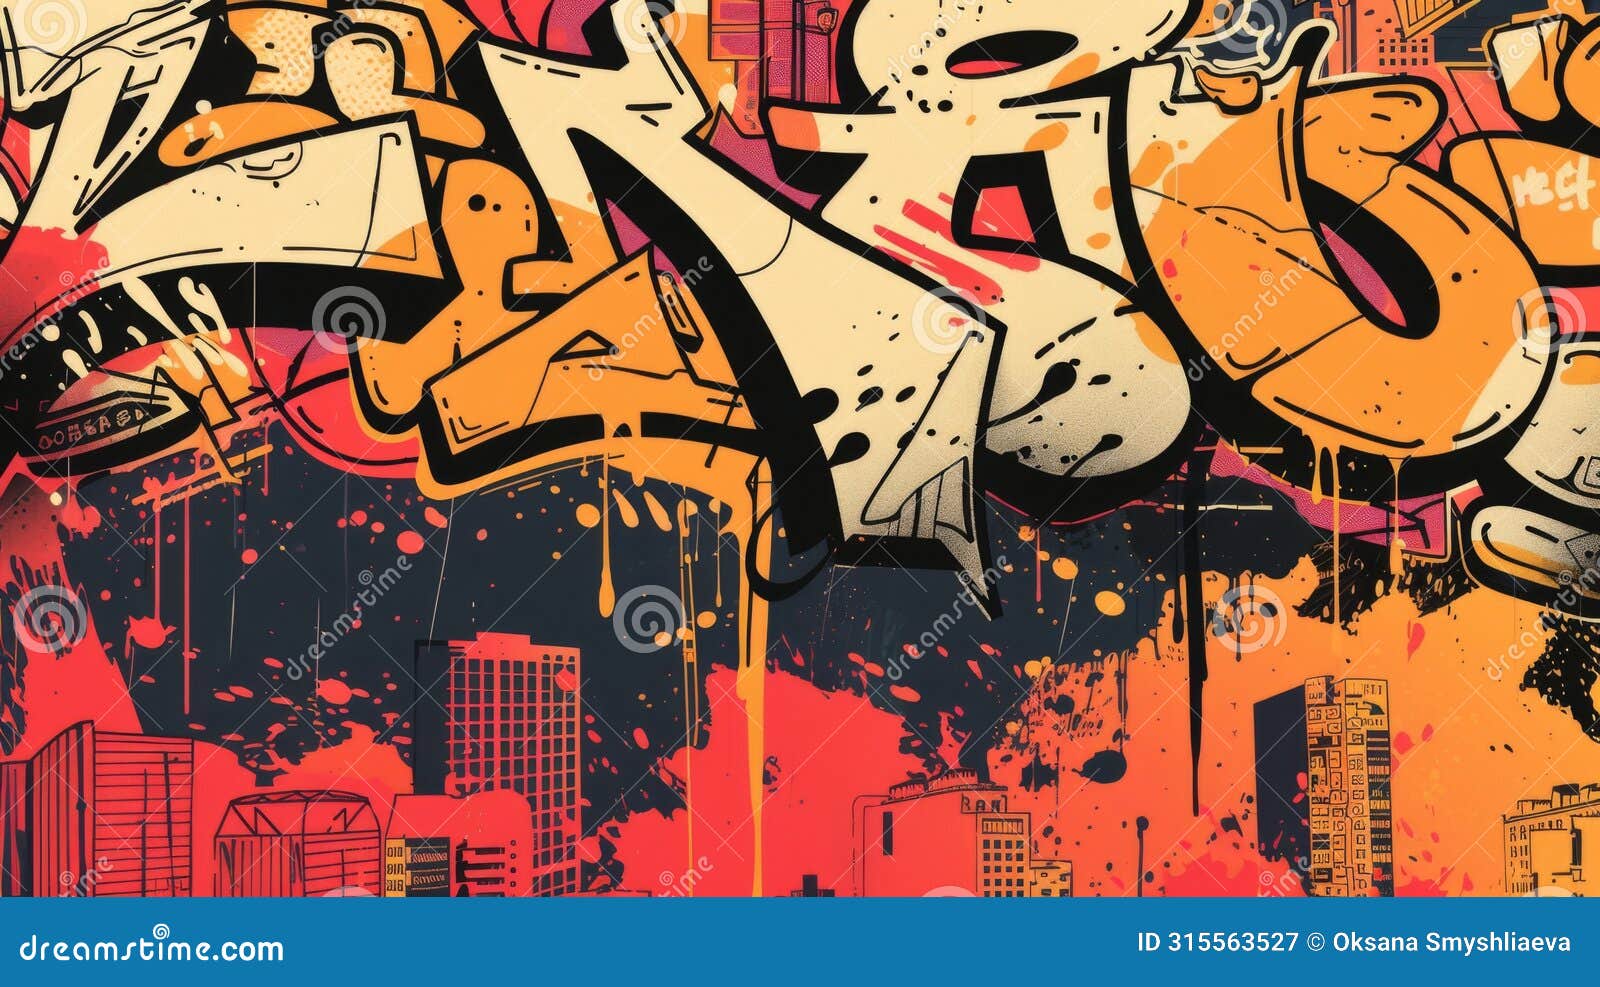 urban graffiti art on wall with vibrant cityscape background